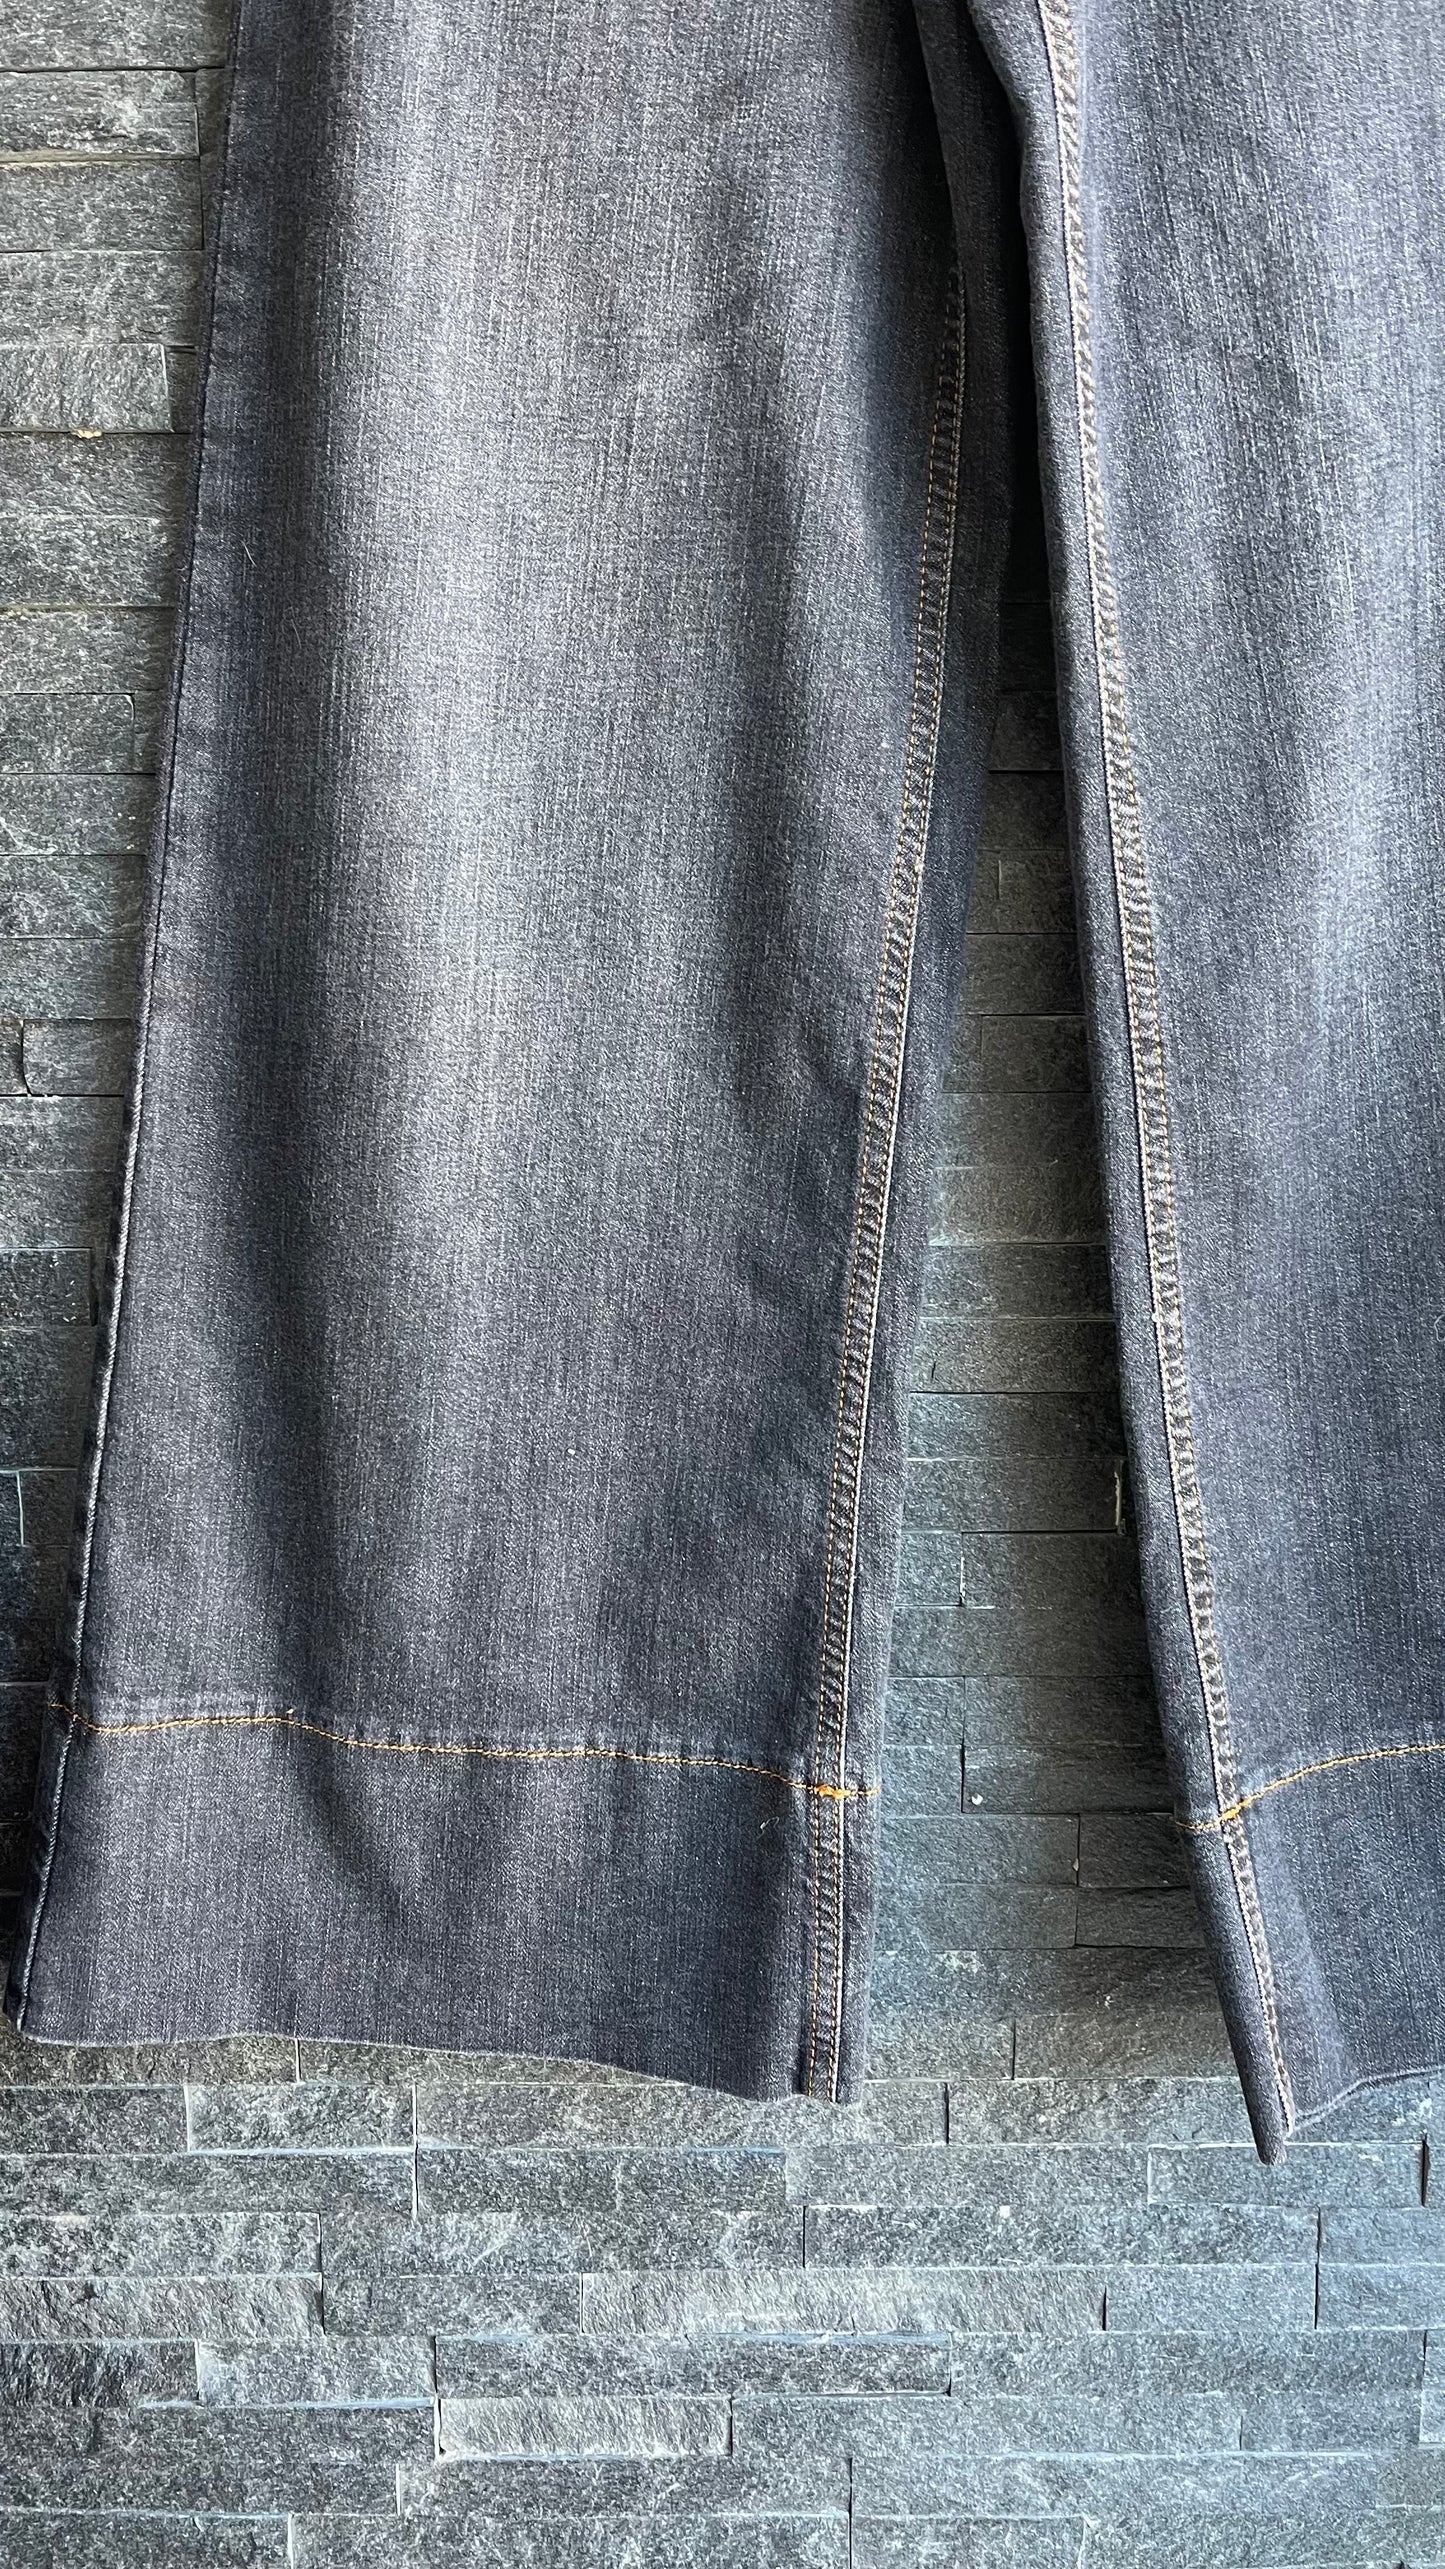 Jeans grey